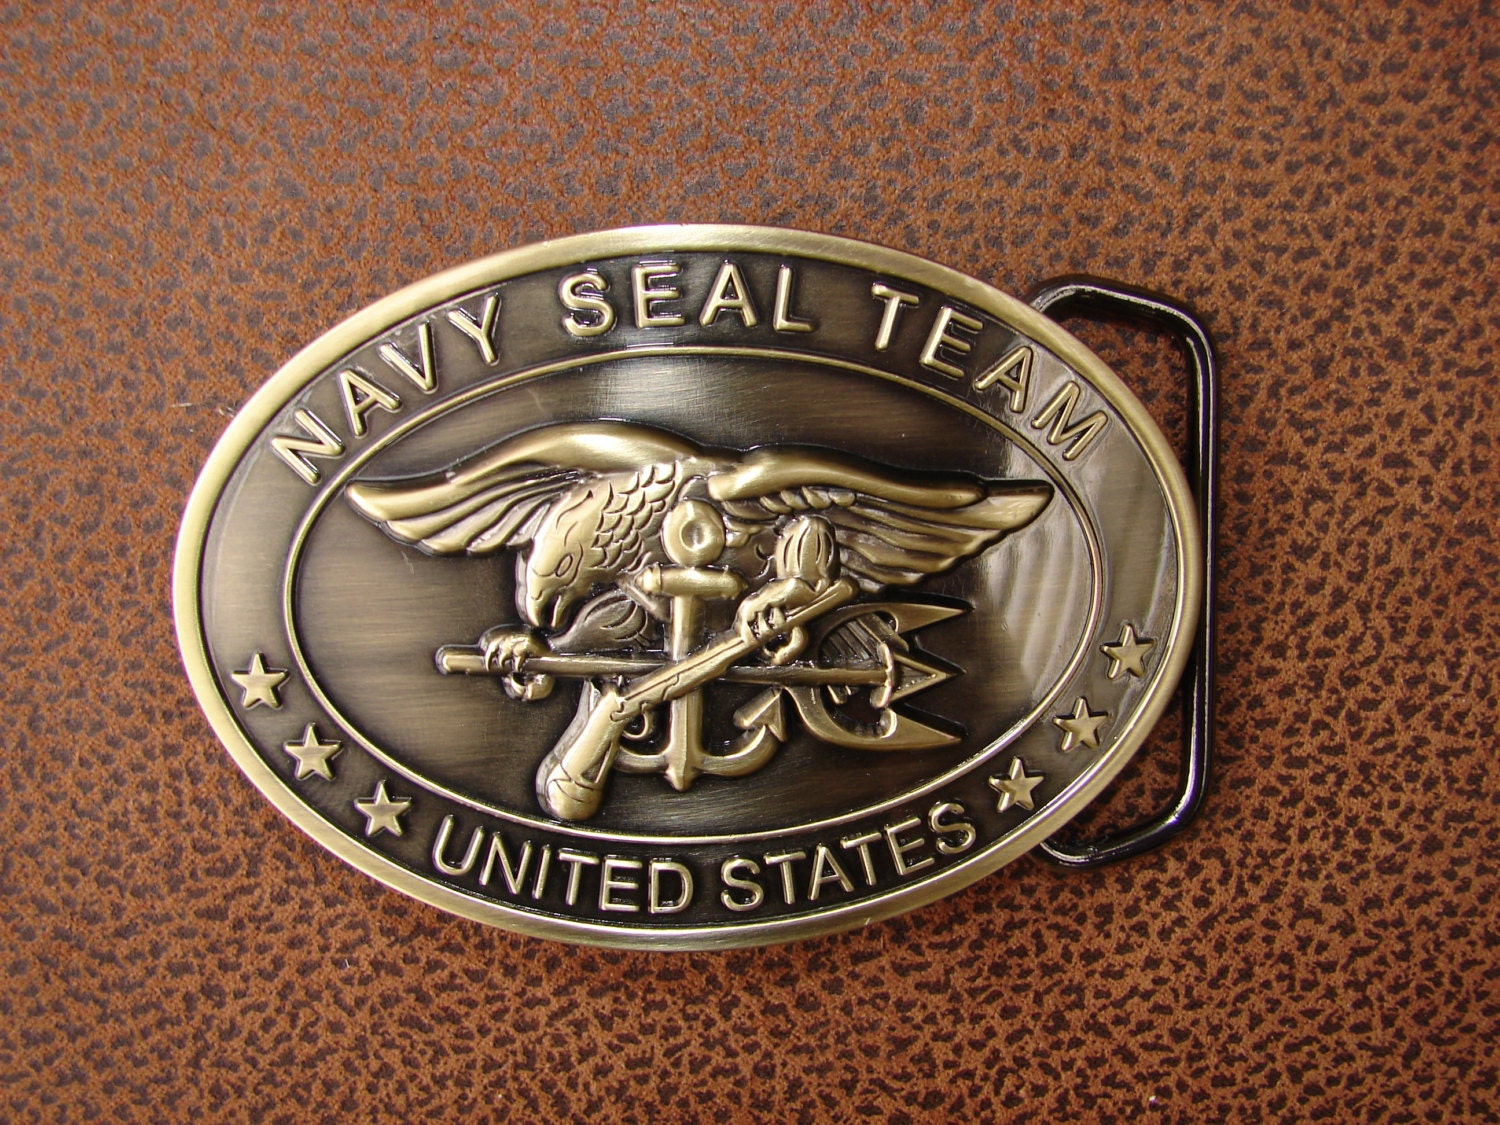 Military Belt Buckle U.S. Navy Seal Team brass plated belt